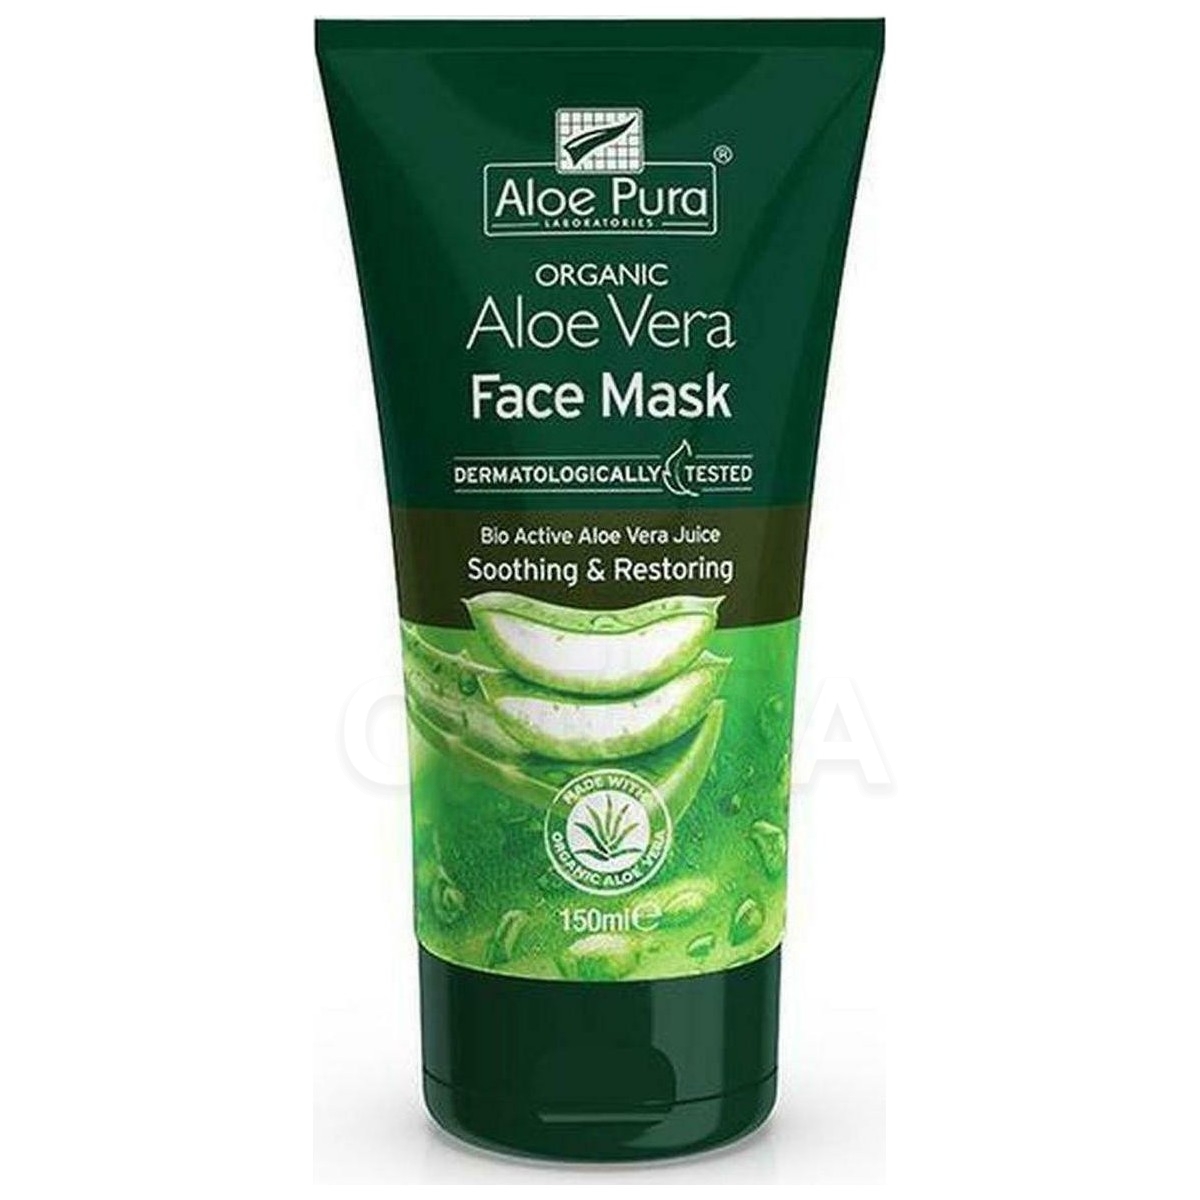 OPTIMA Aloe Pura Organic Aloe Vera Face Mask Μάσκα Προσώπου με Αλόη Βέρα  150ml